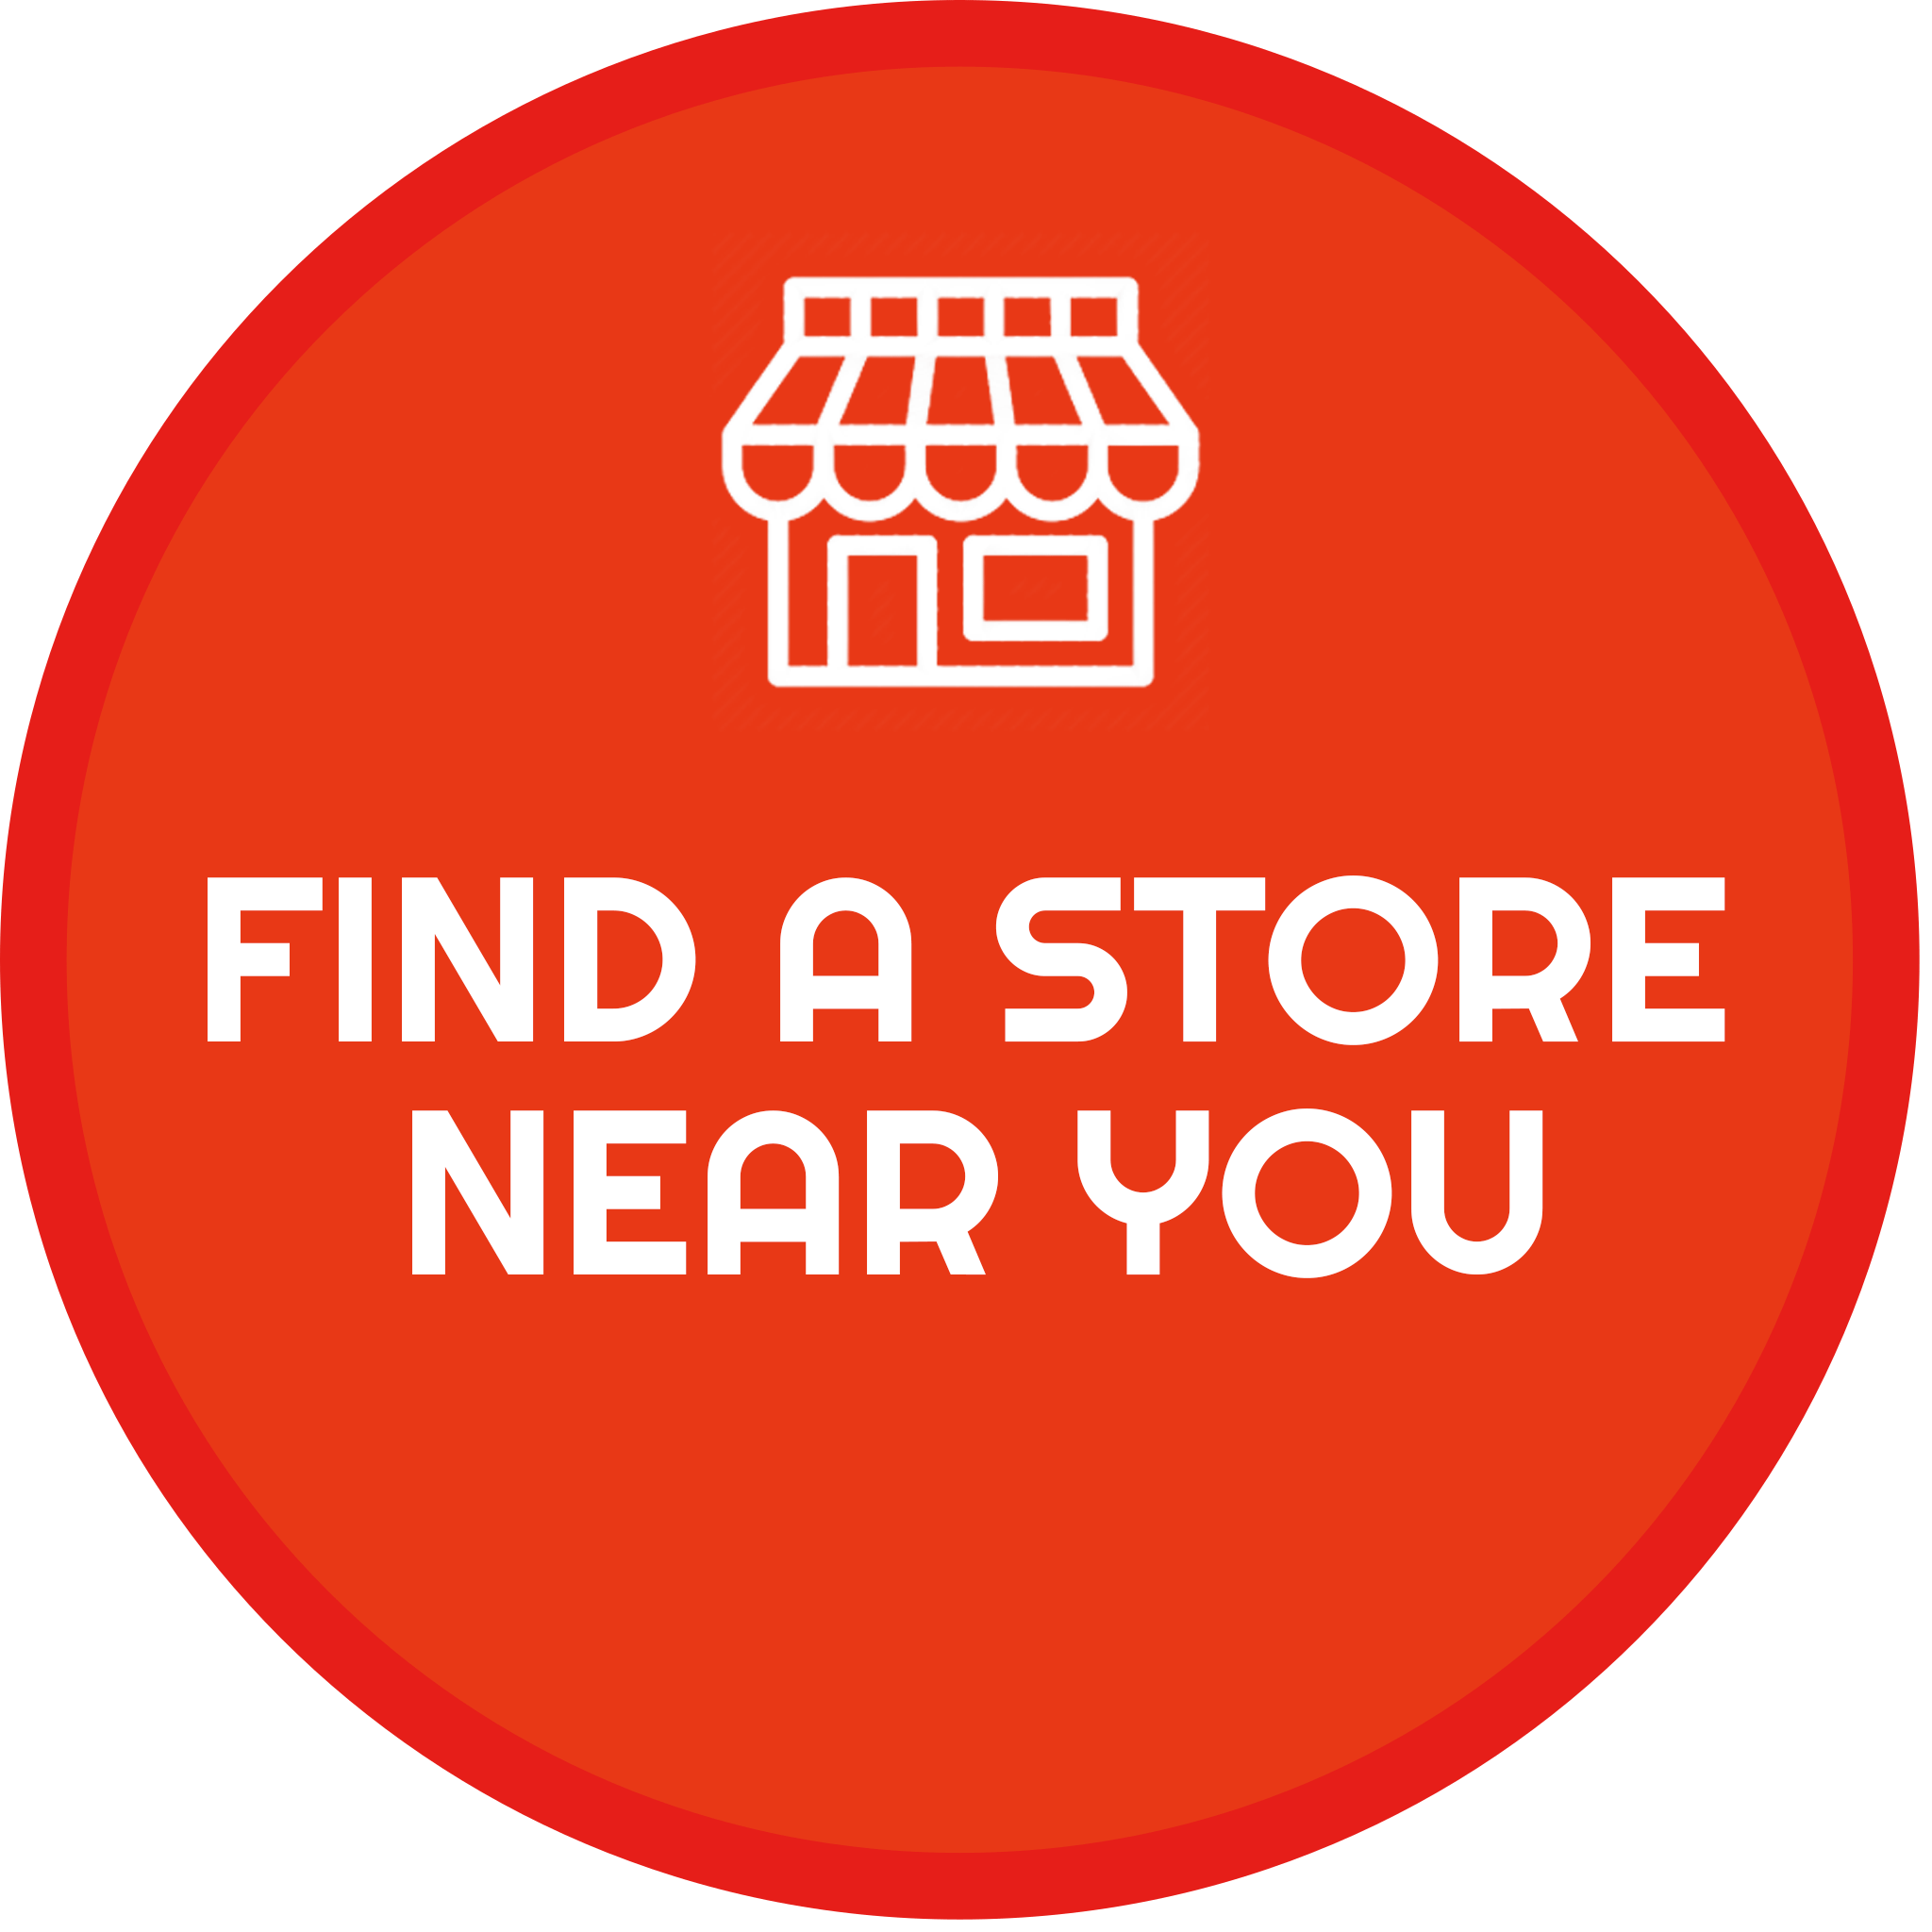 Find a store near you